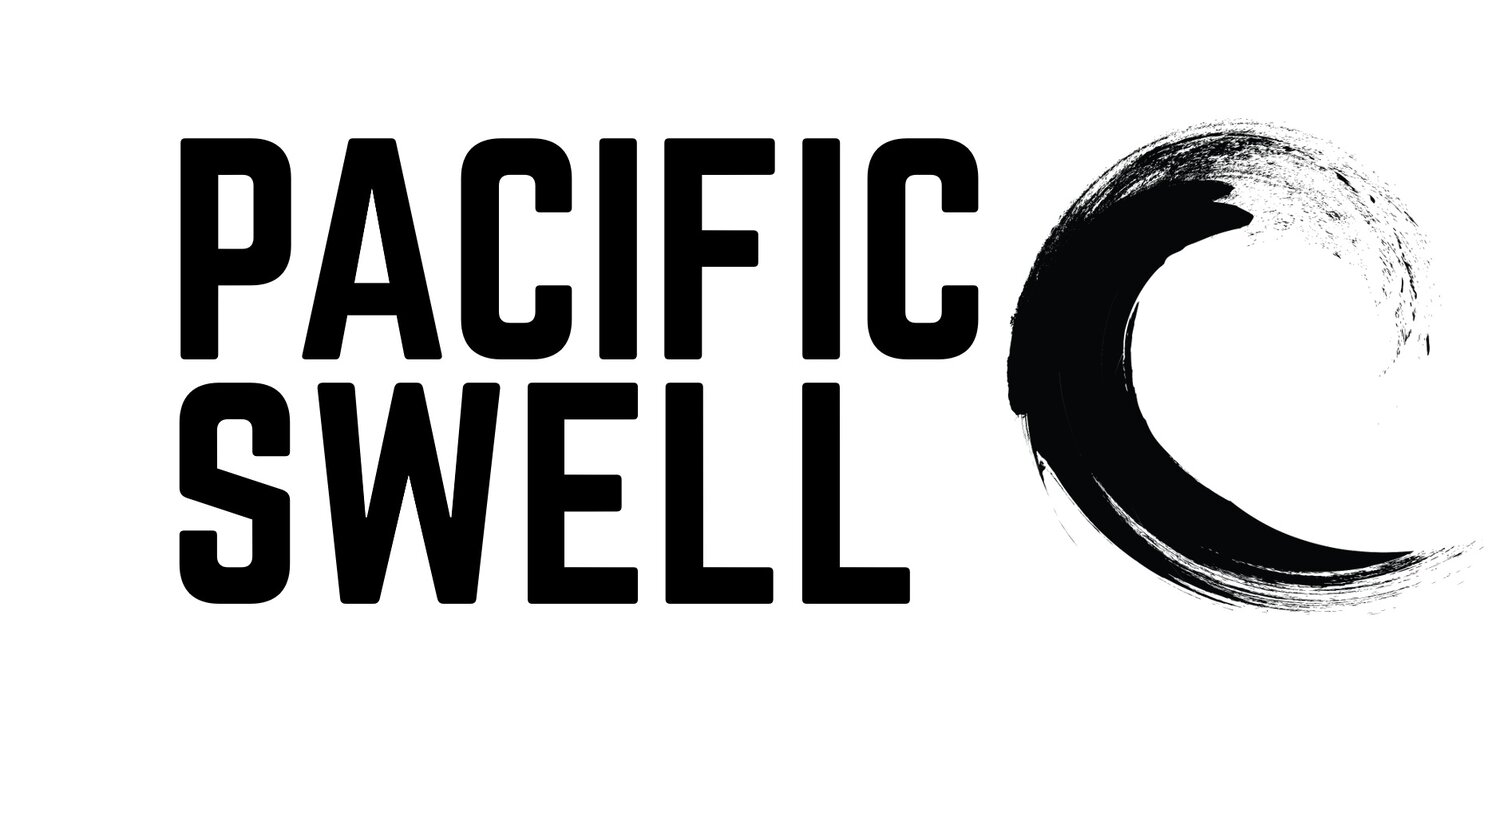 Pacific Swell Developments, Inc